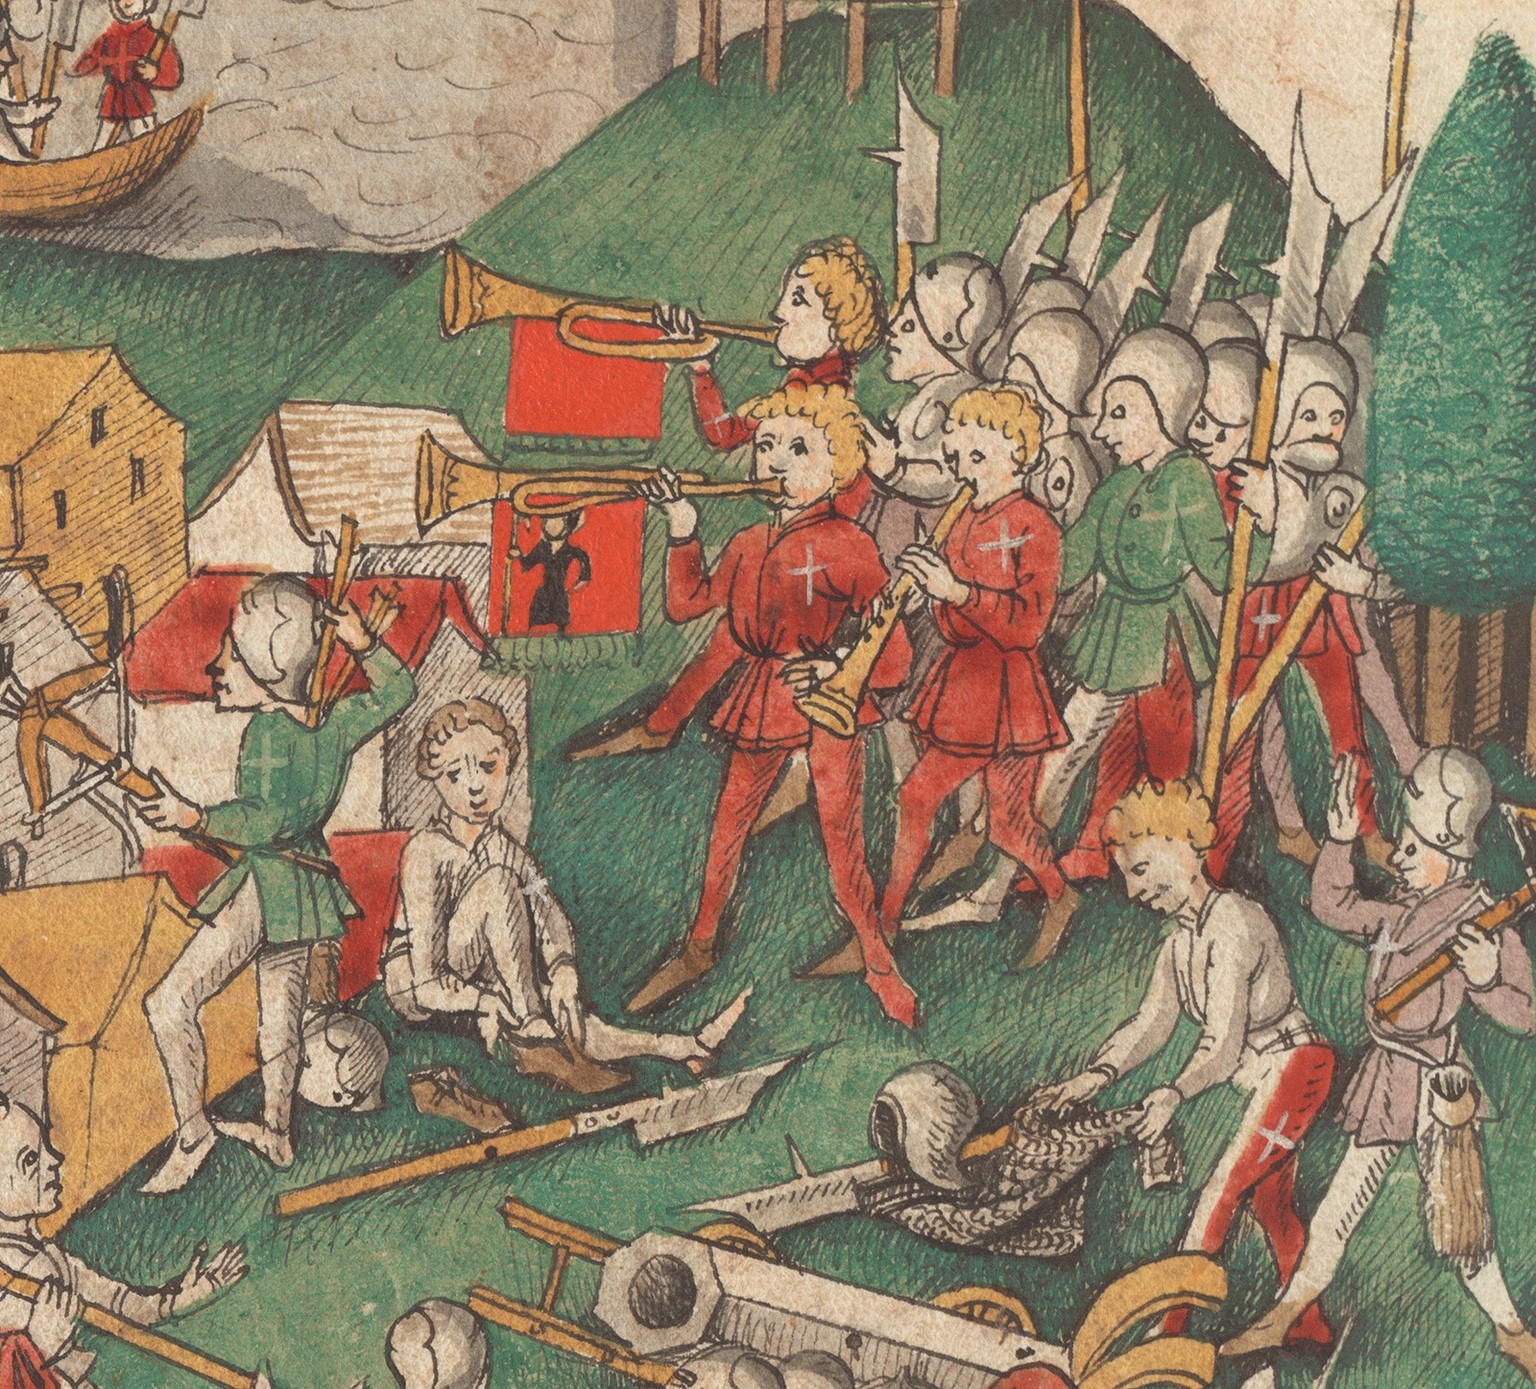 Trompeter blasen zu den Waffen, 1440.
https://www.e-manuscripta.ch/zuz/content/zoom/2402951